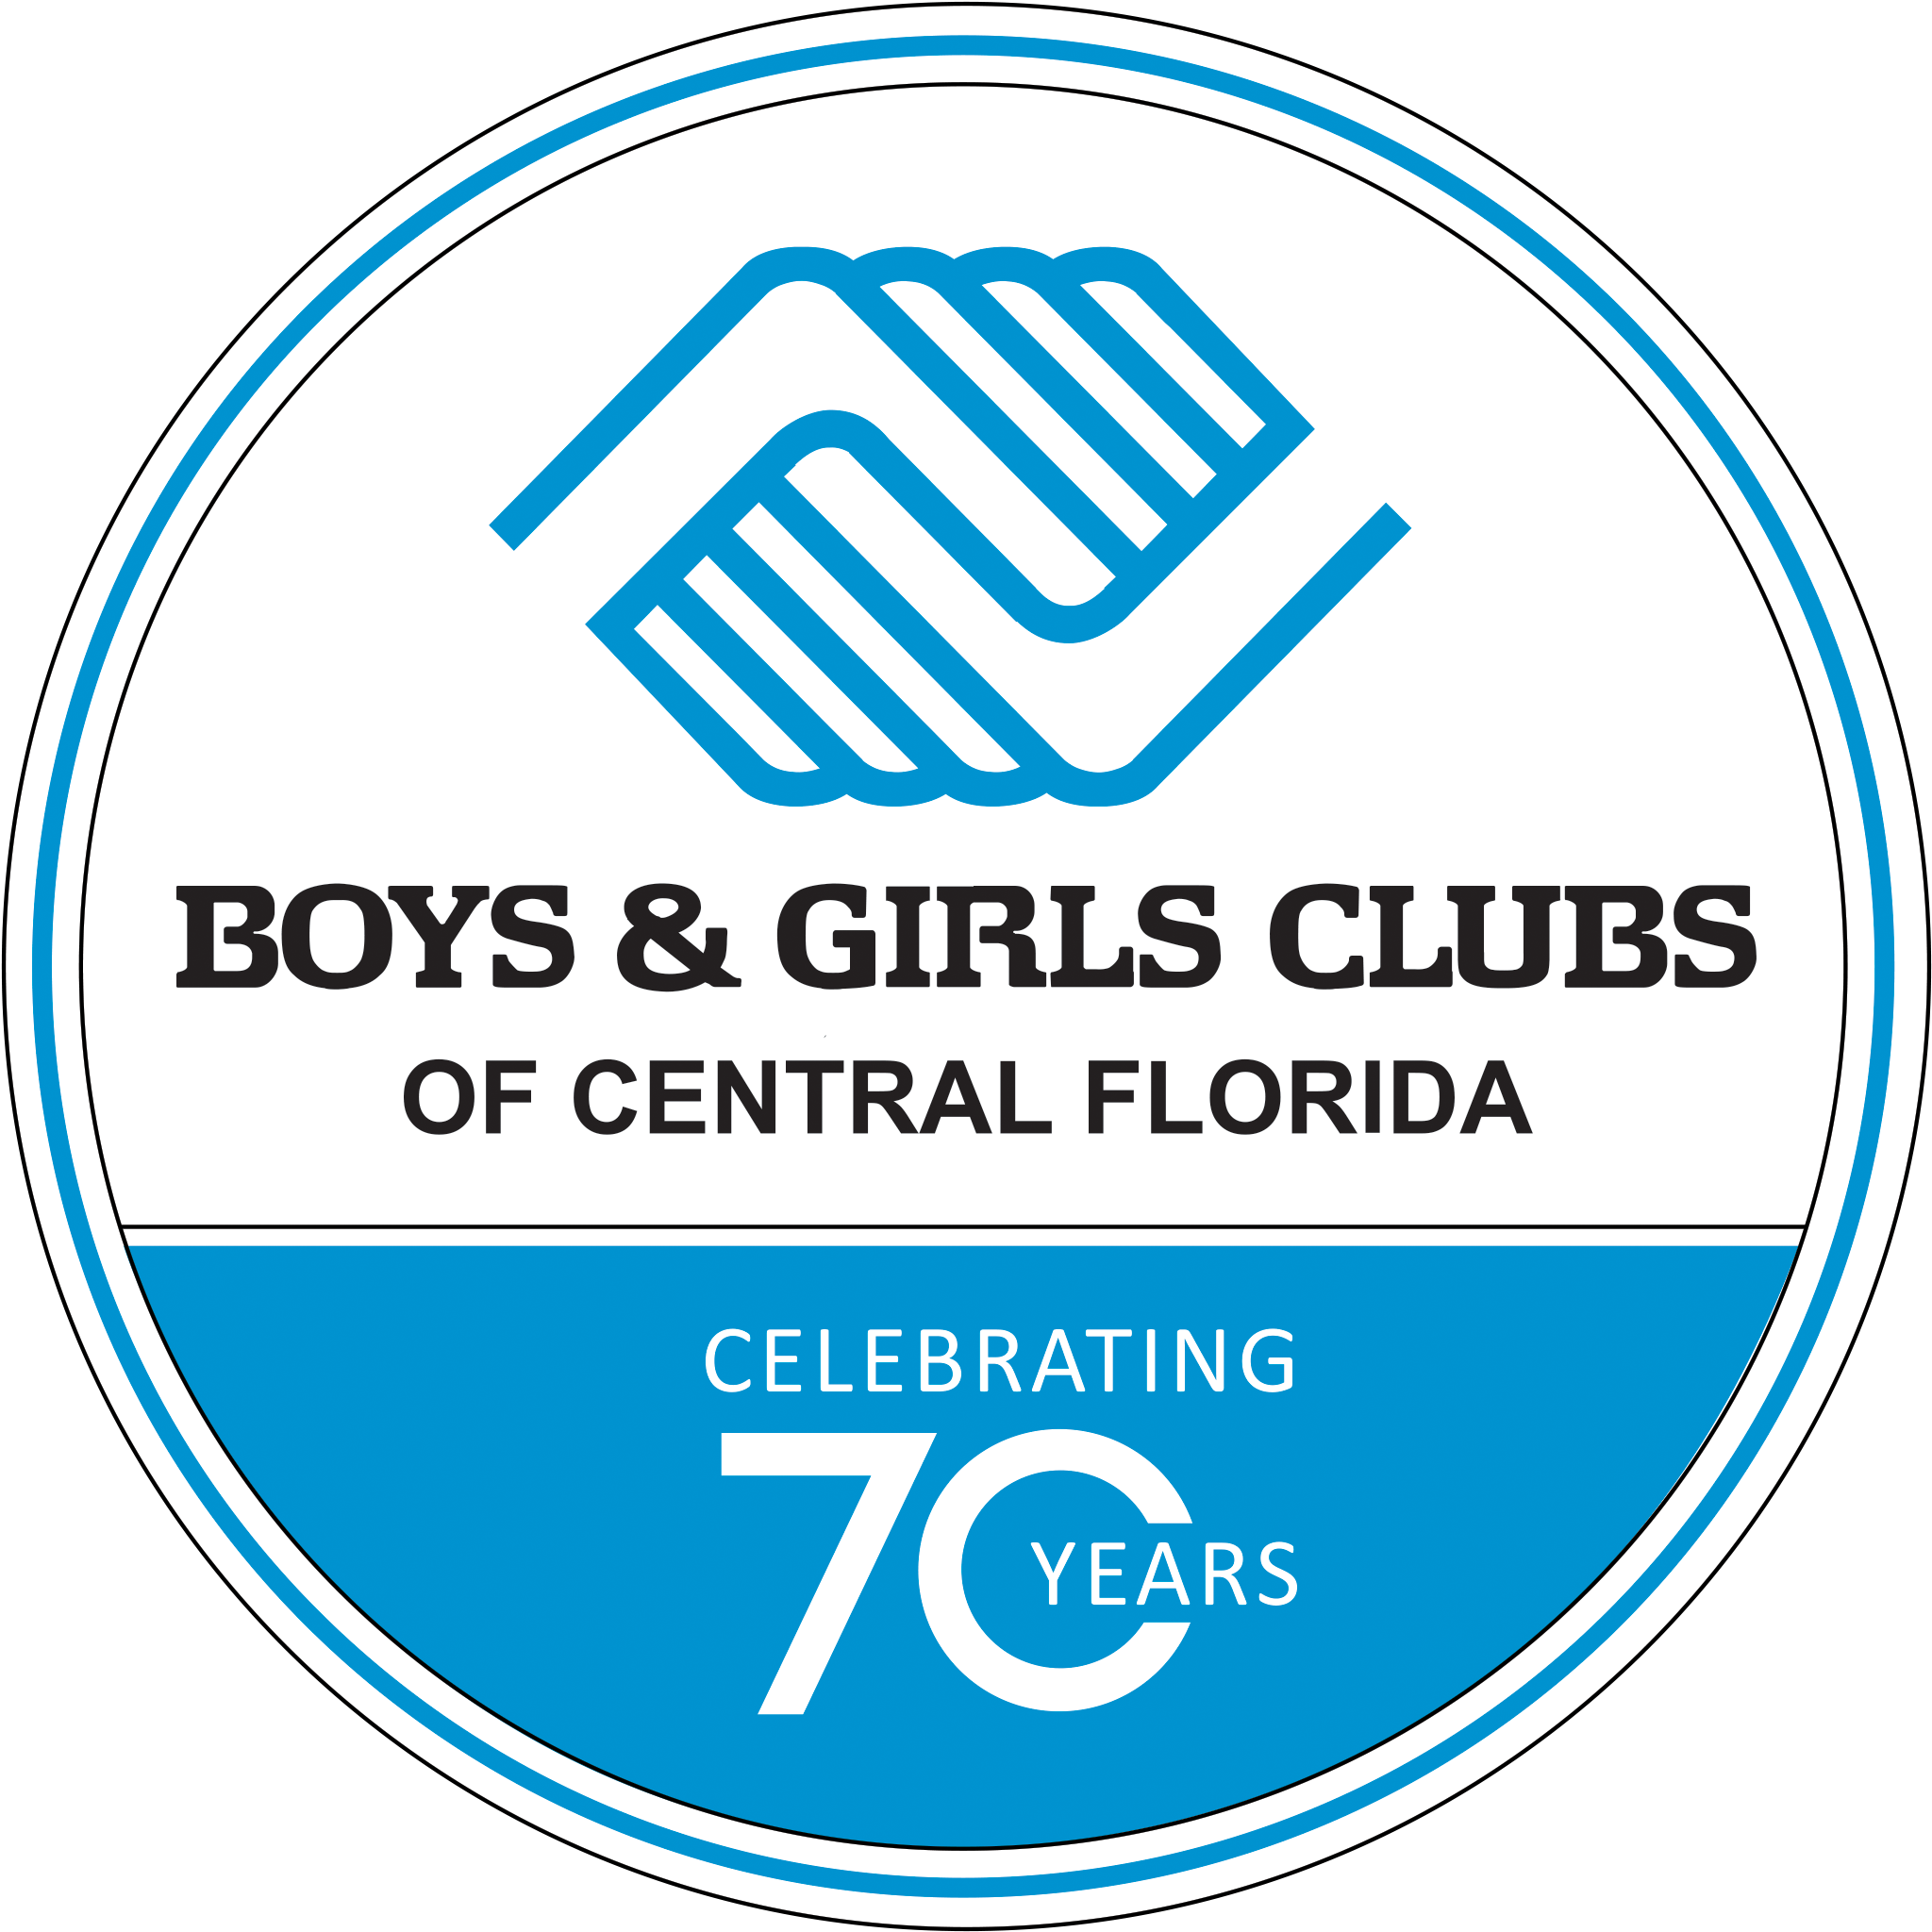 70th Anniversary Logo - Boys And Girls Club Garden Grove (2091x2091)